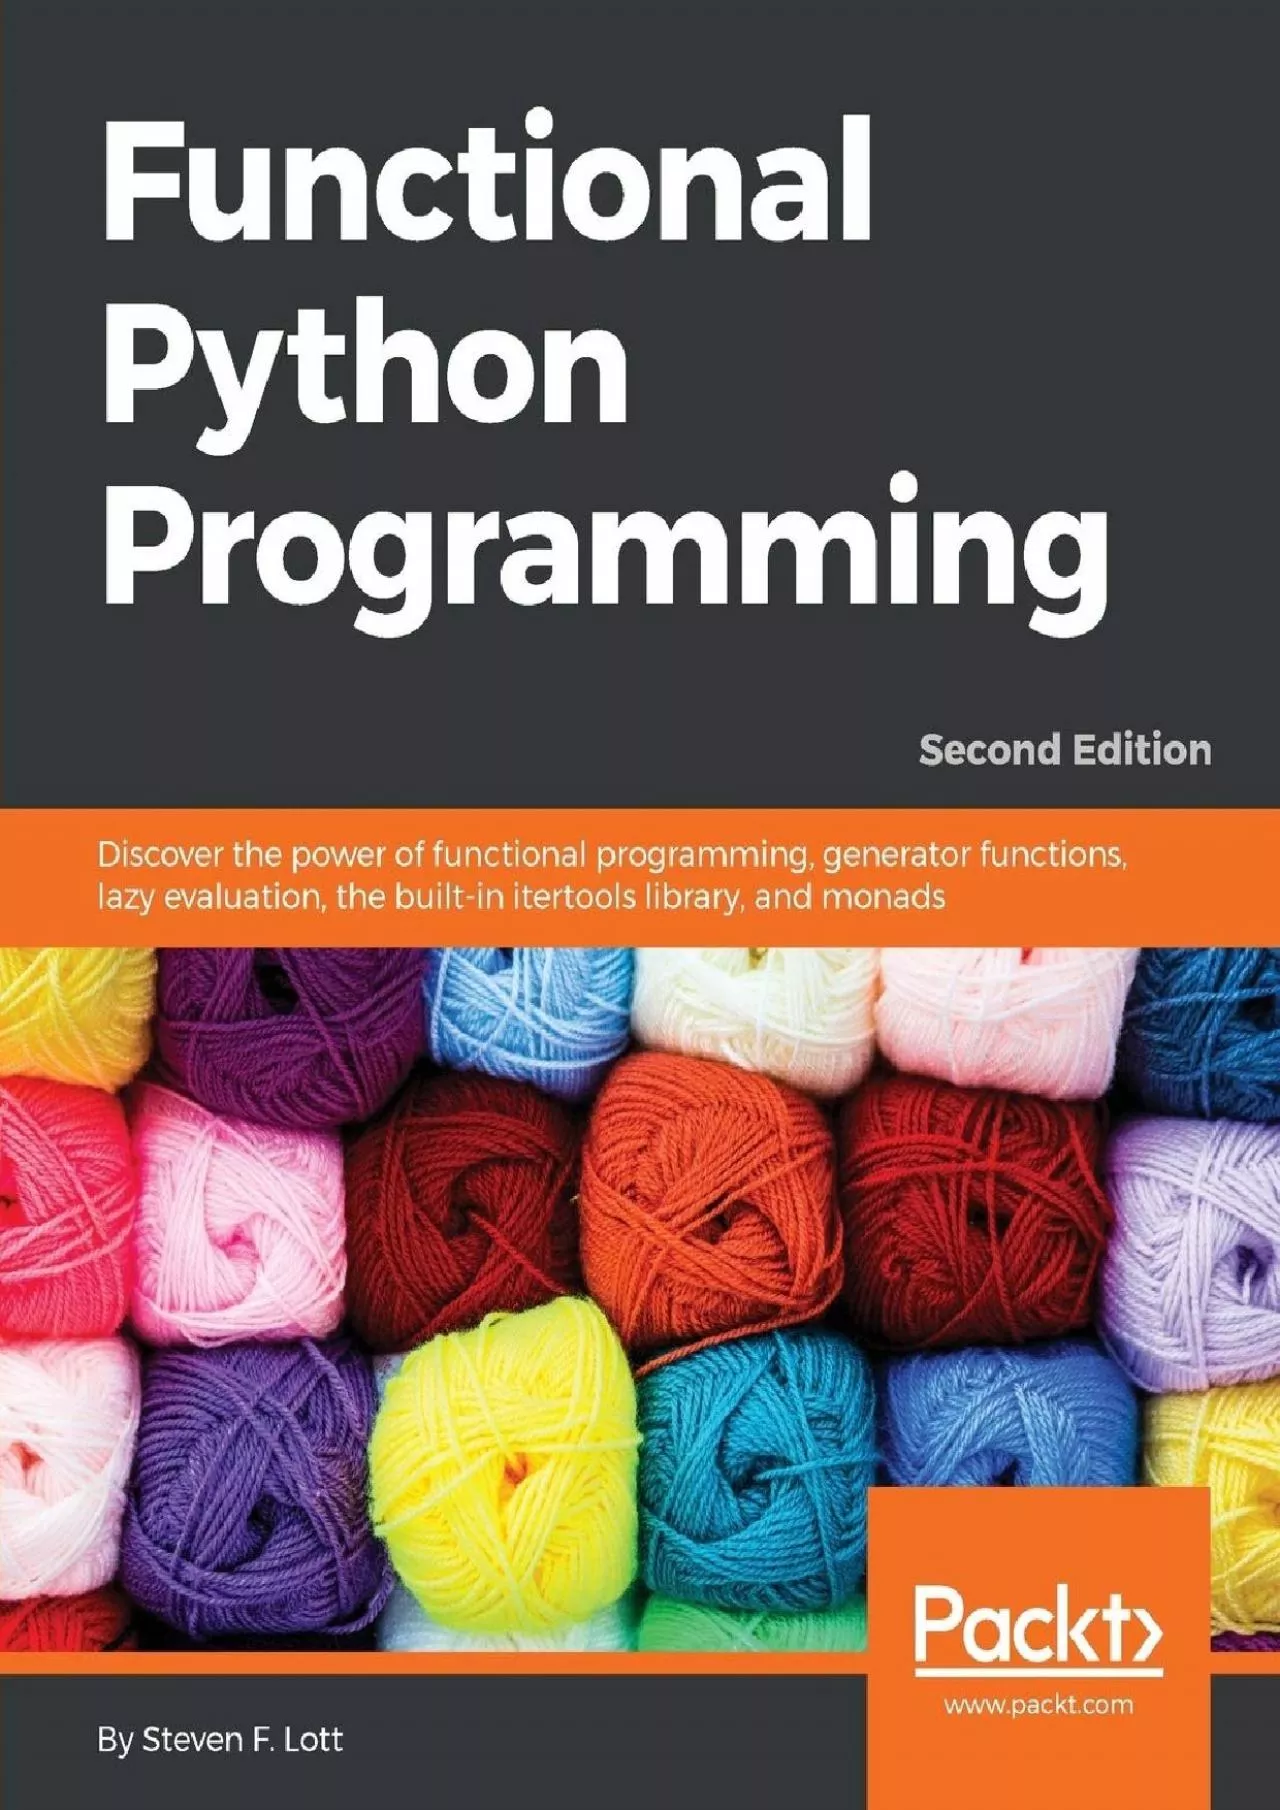 [READING BOOK]-Functional Python Programming: Discover the power of functional programming,